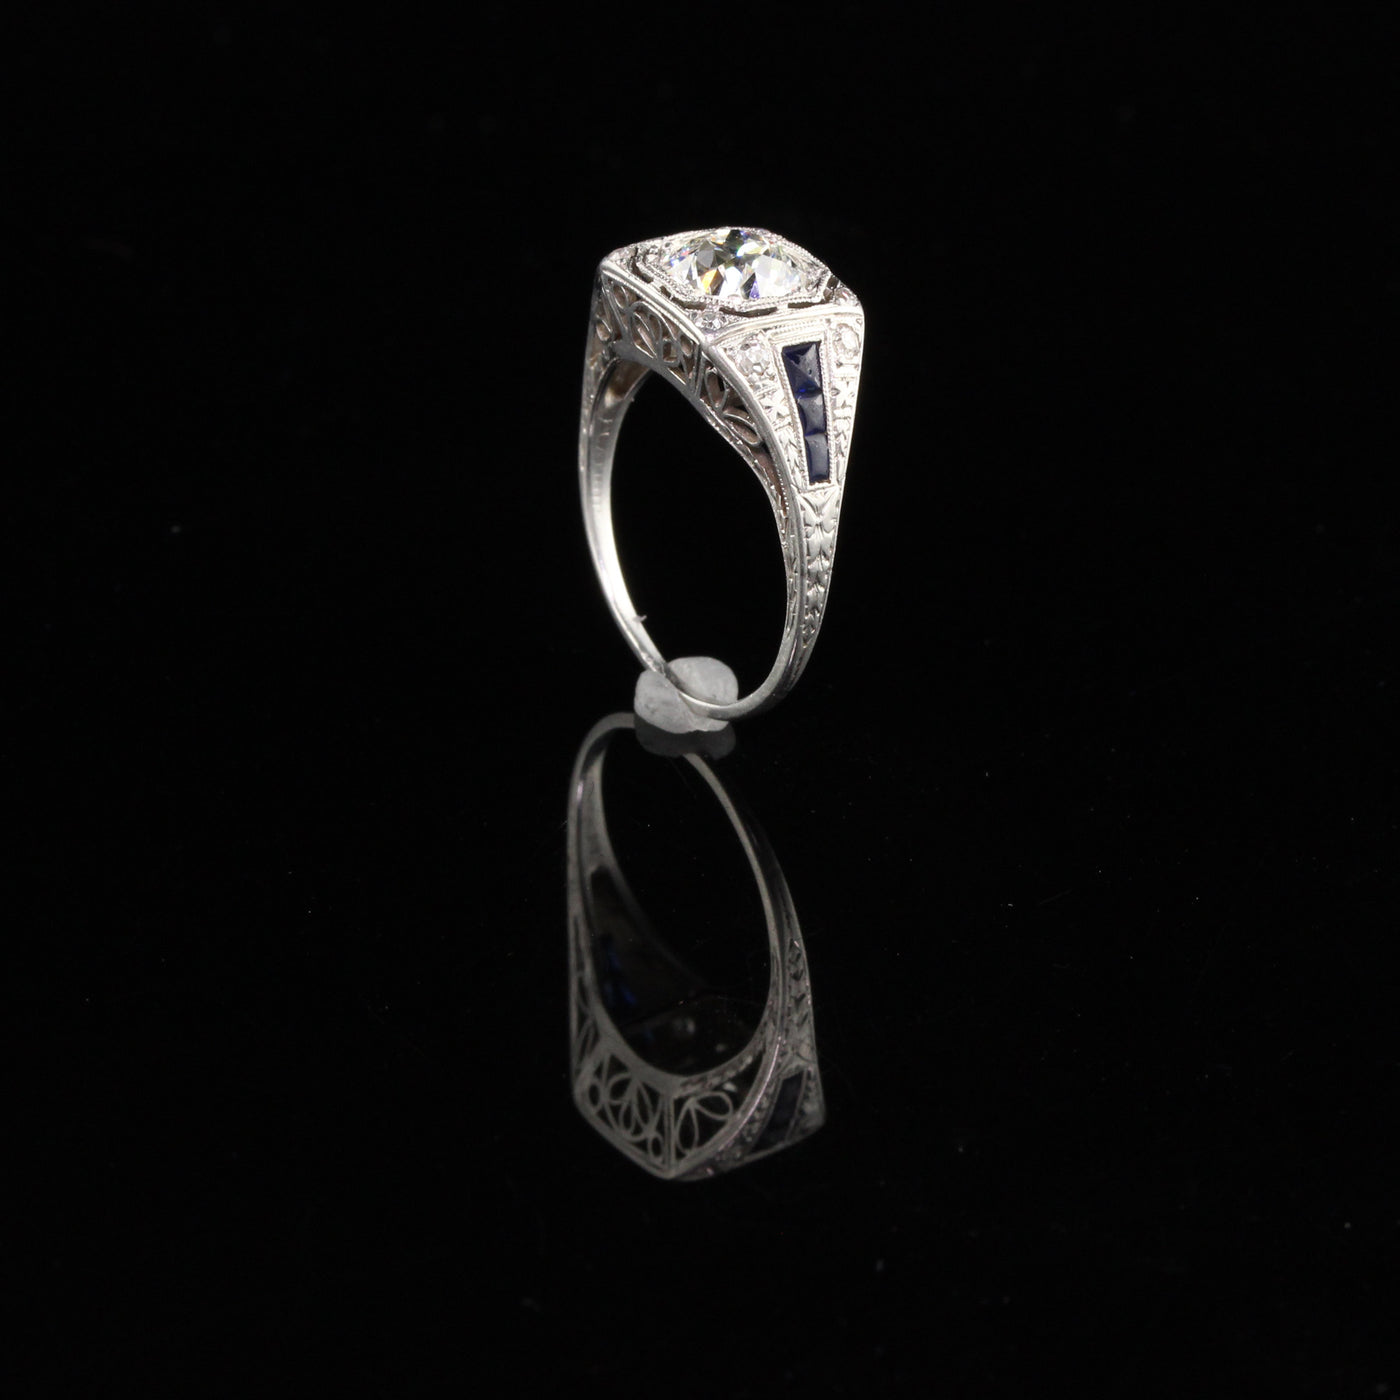 Antique Art Deco Platinum Old European Cut Diamond & Sapphire Engagement Ring - GIA Certified!